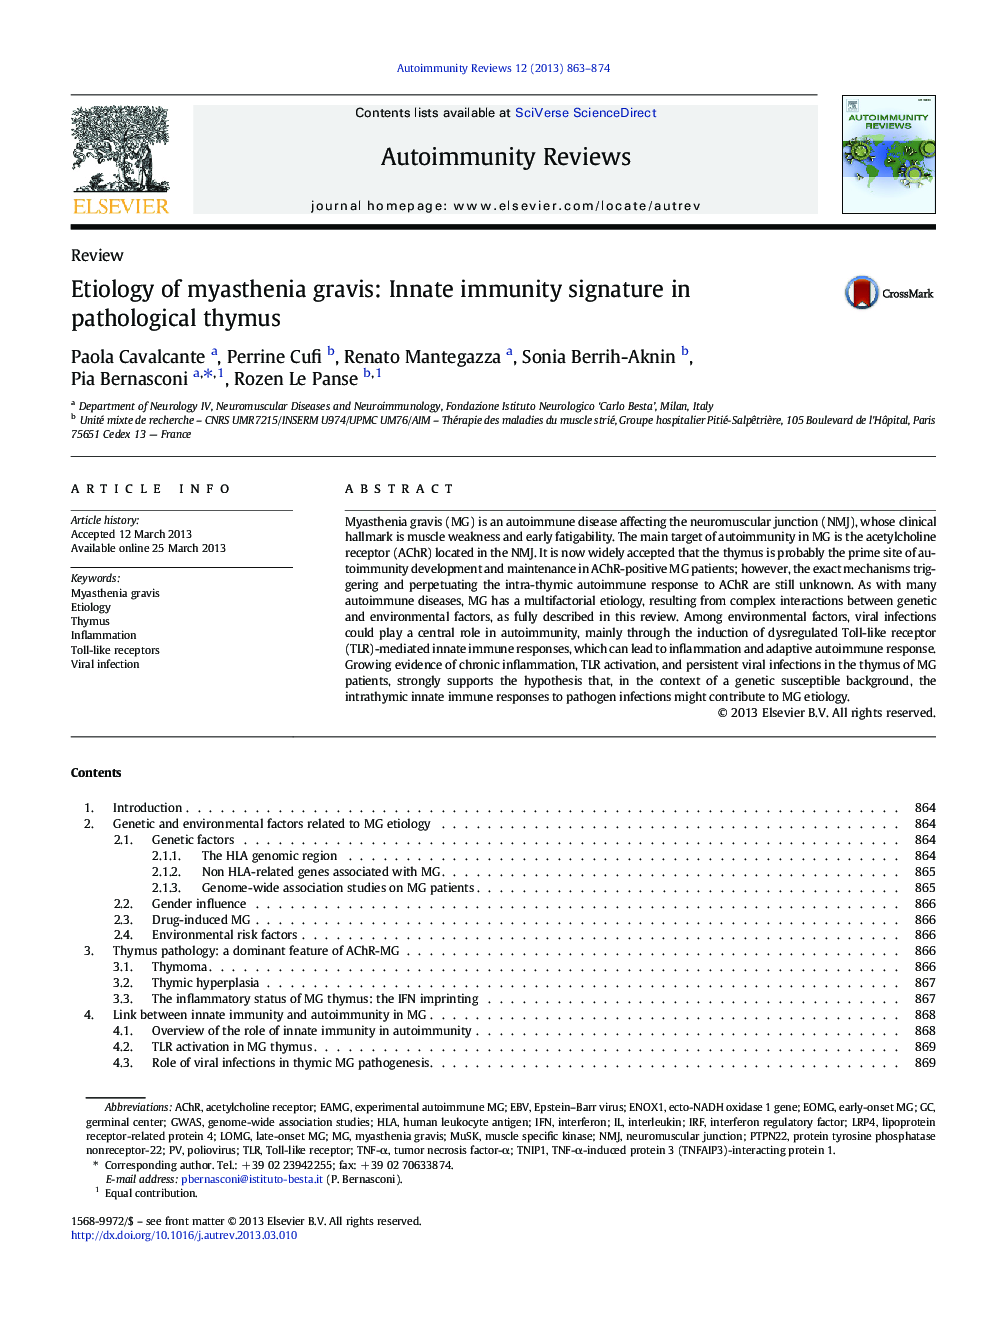 Etiology of myasthenia gravis: Innate immunity signature in pathological thymus